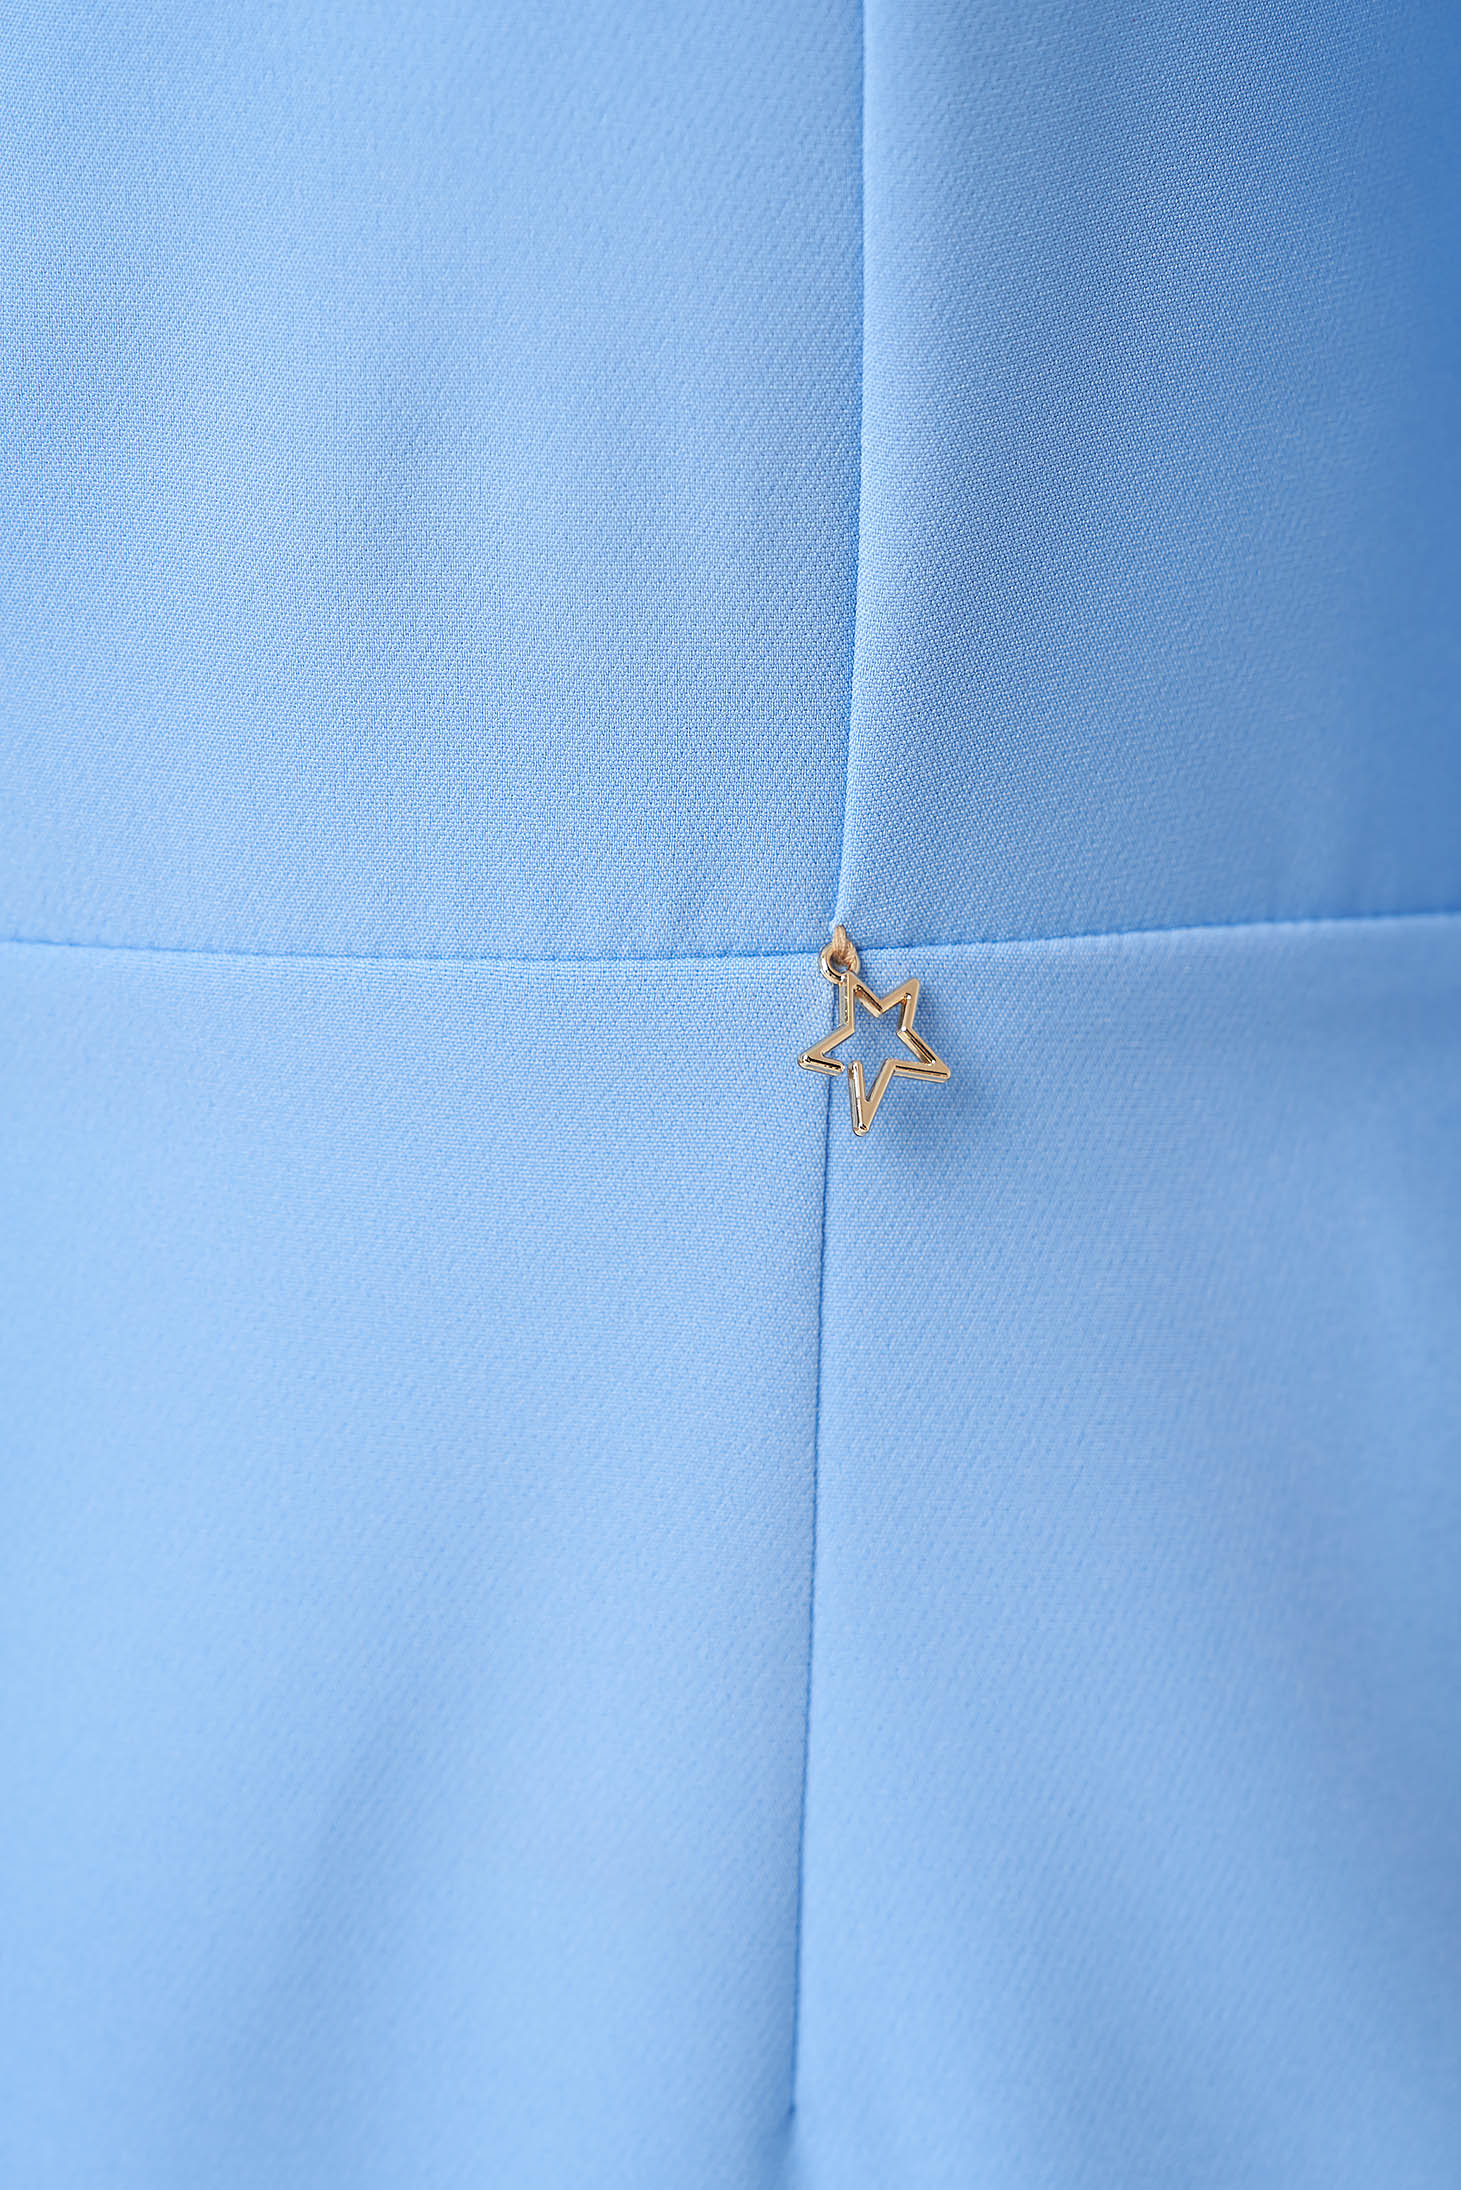 Rochie din stofa usor elastica albastru-deschis scurta tip creion cu umeri bufanti - StarShinerS 5 - StarShinerS.ro